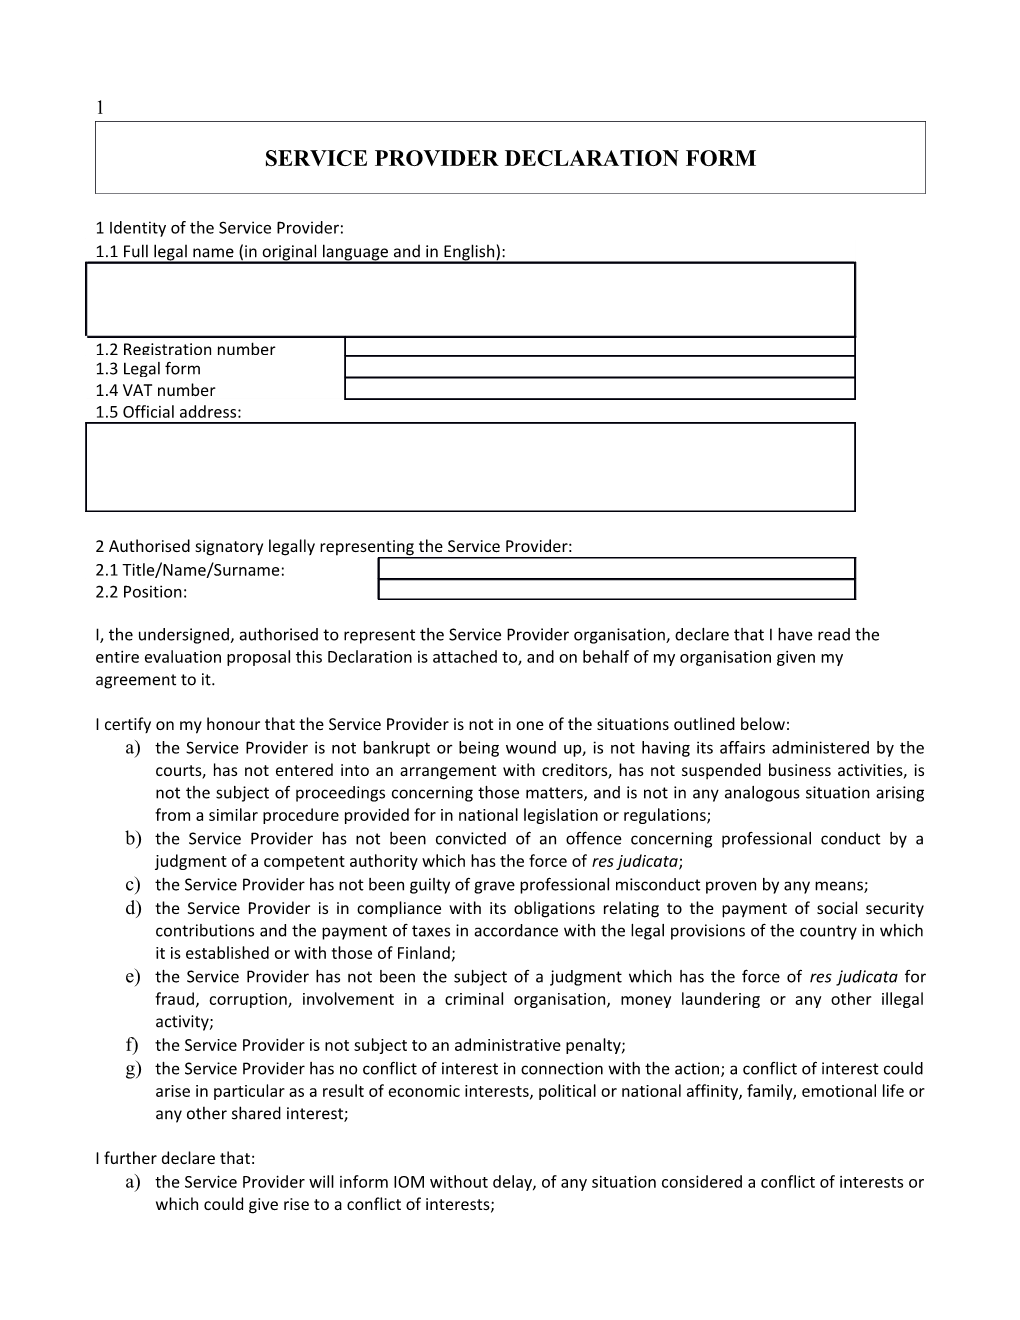 Service Provider Declaration Form